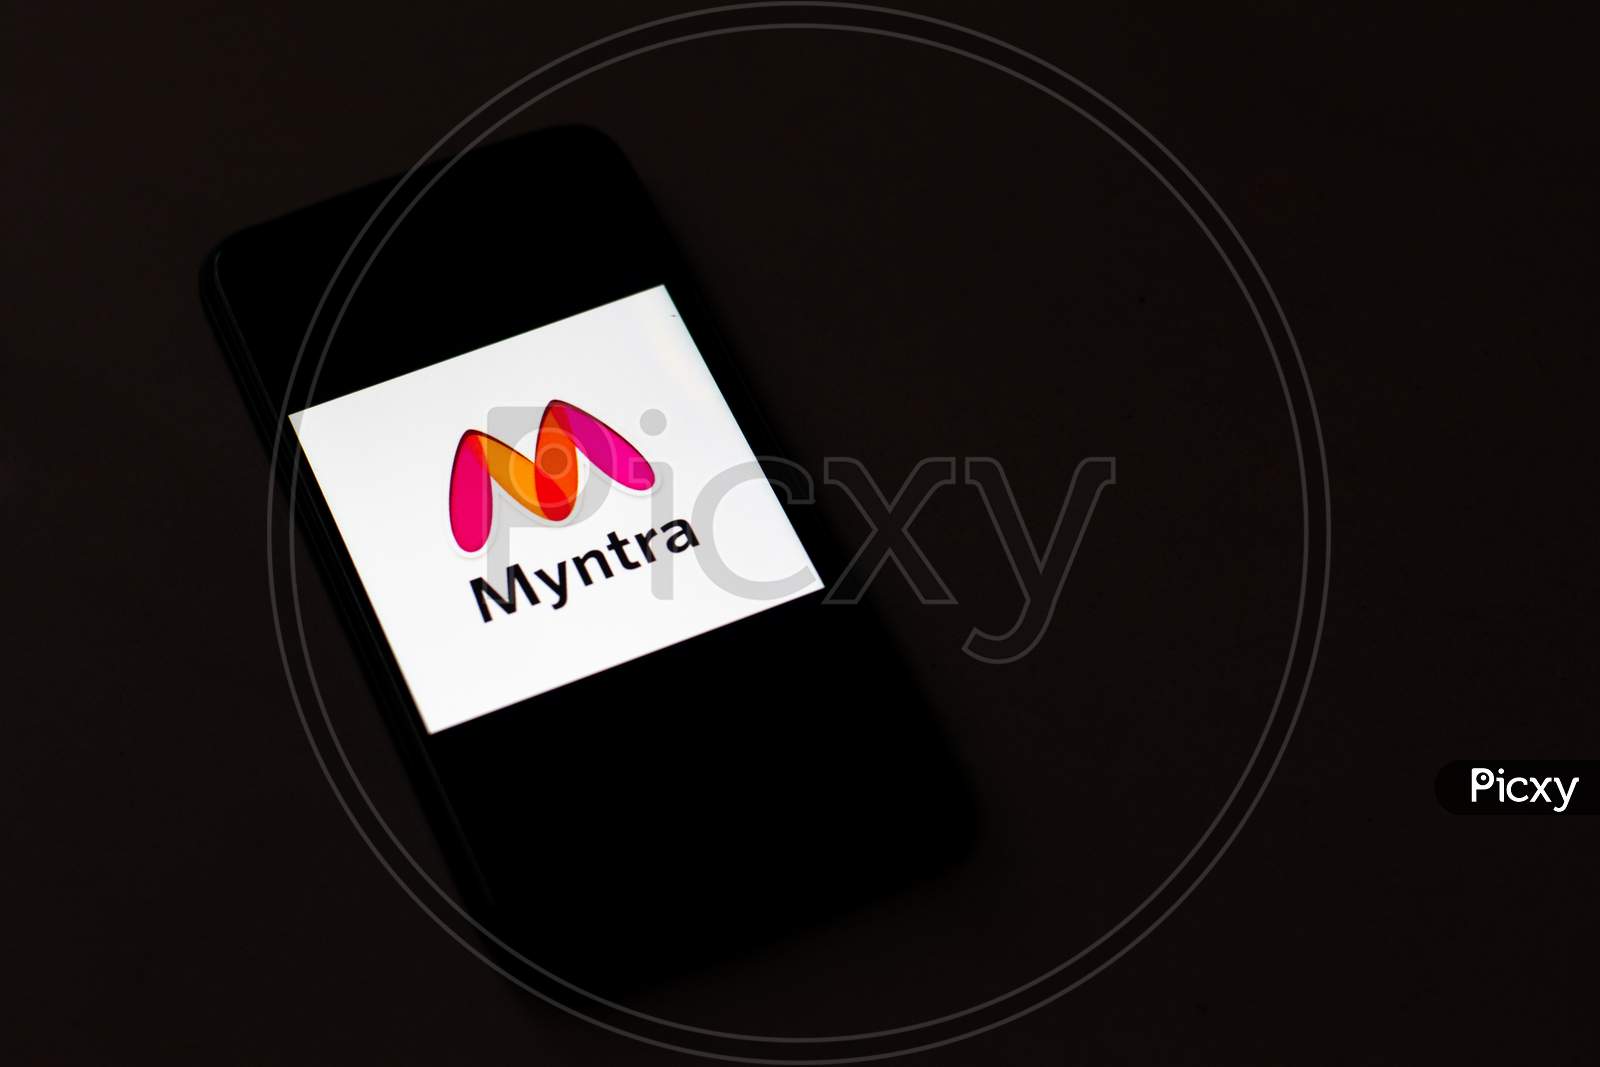 Myntra mobile application